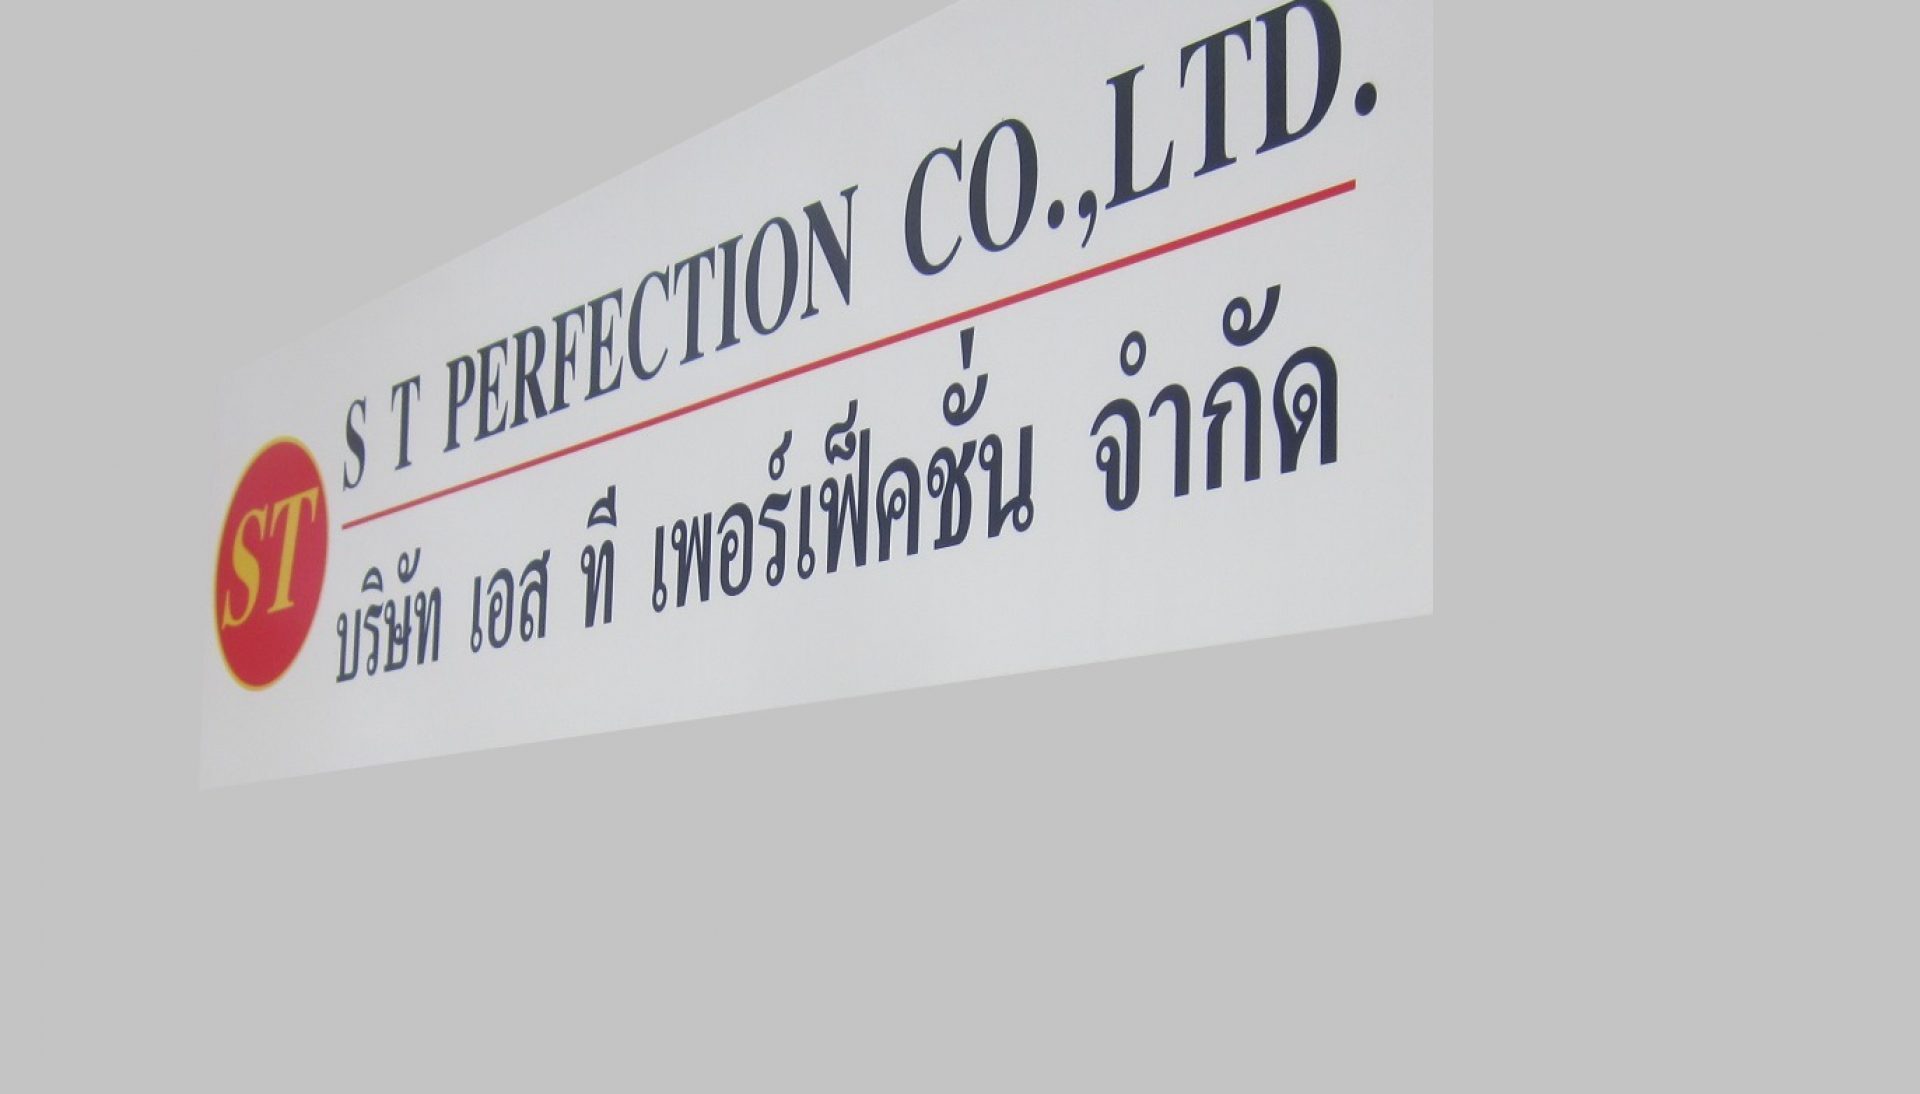 S T PERFECTION CO.,LTD.